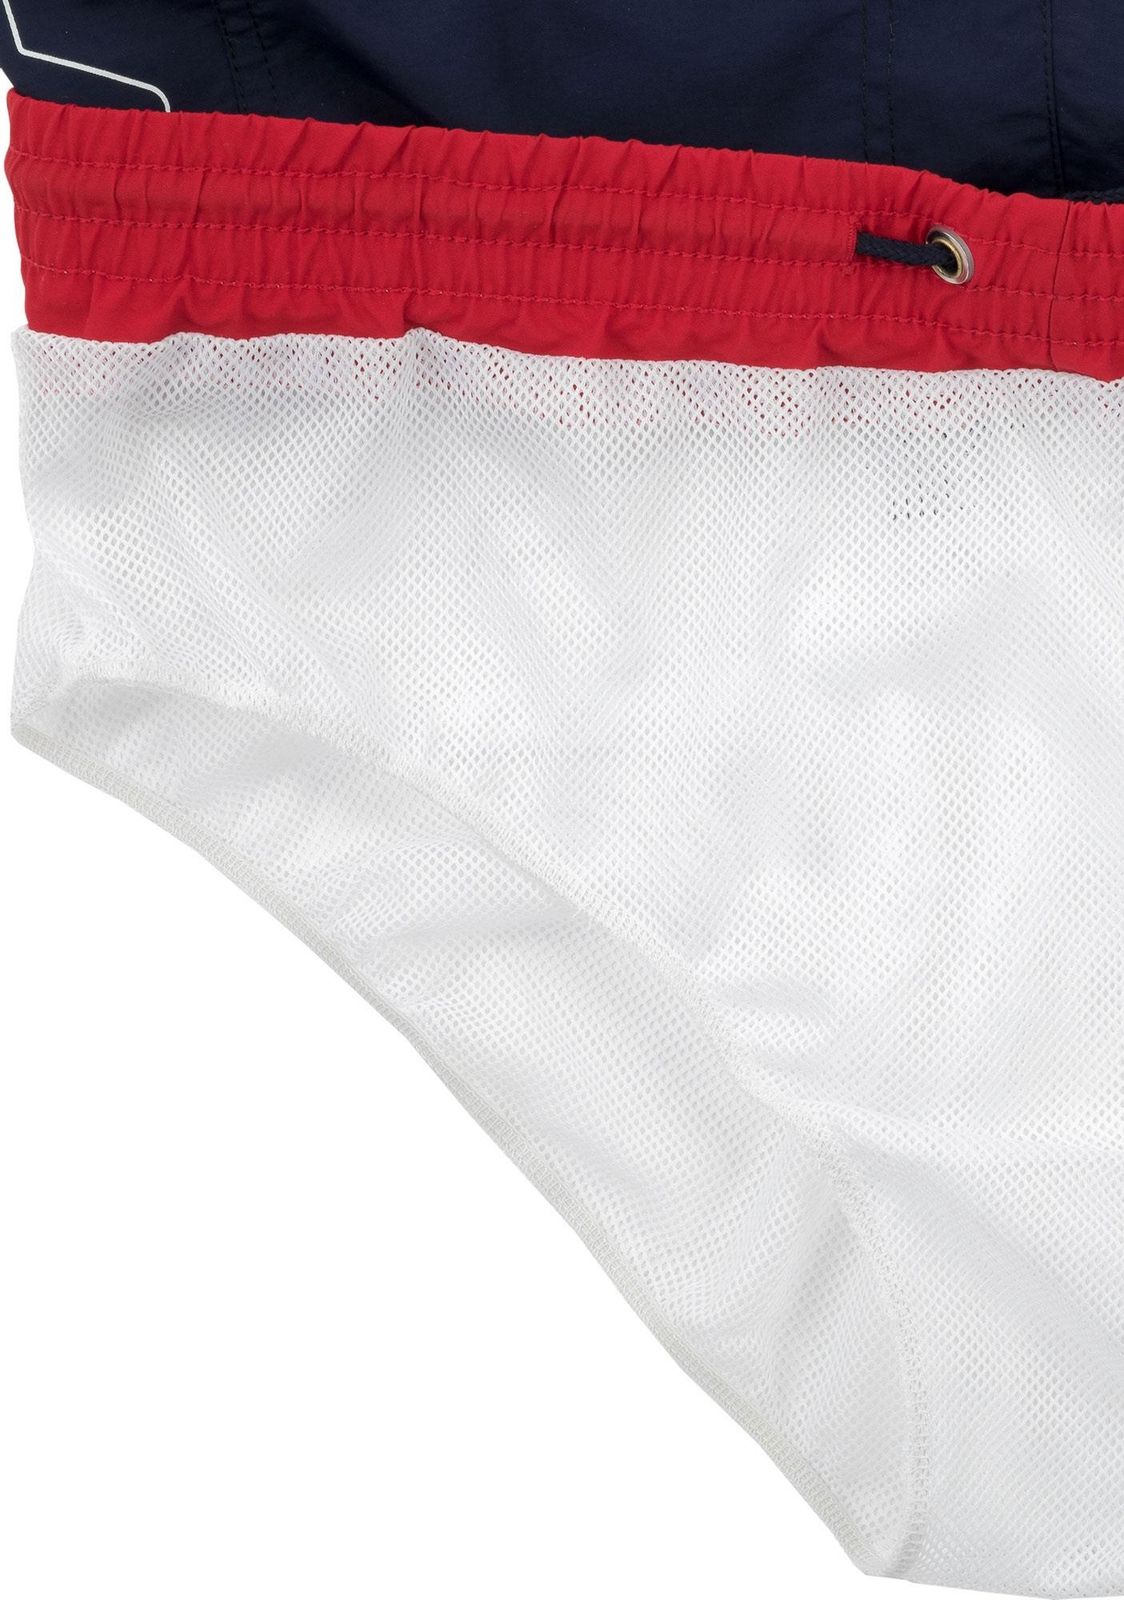   Fila Men's Shorts, : -. S19AFLSHM03-Z4.  M (48)